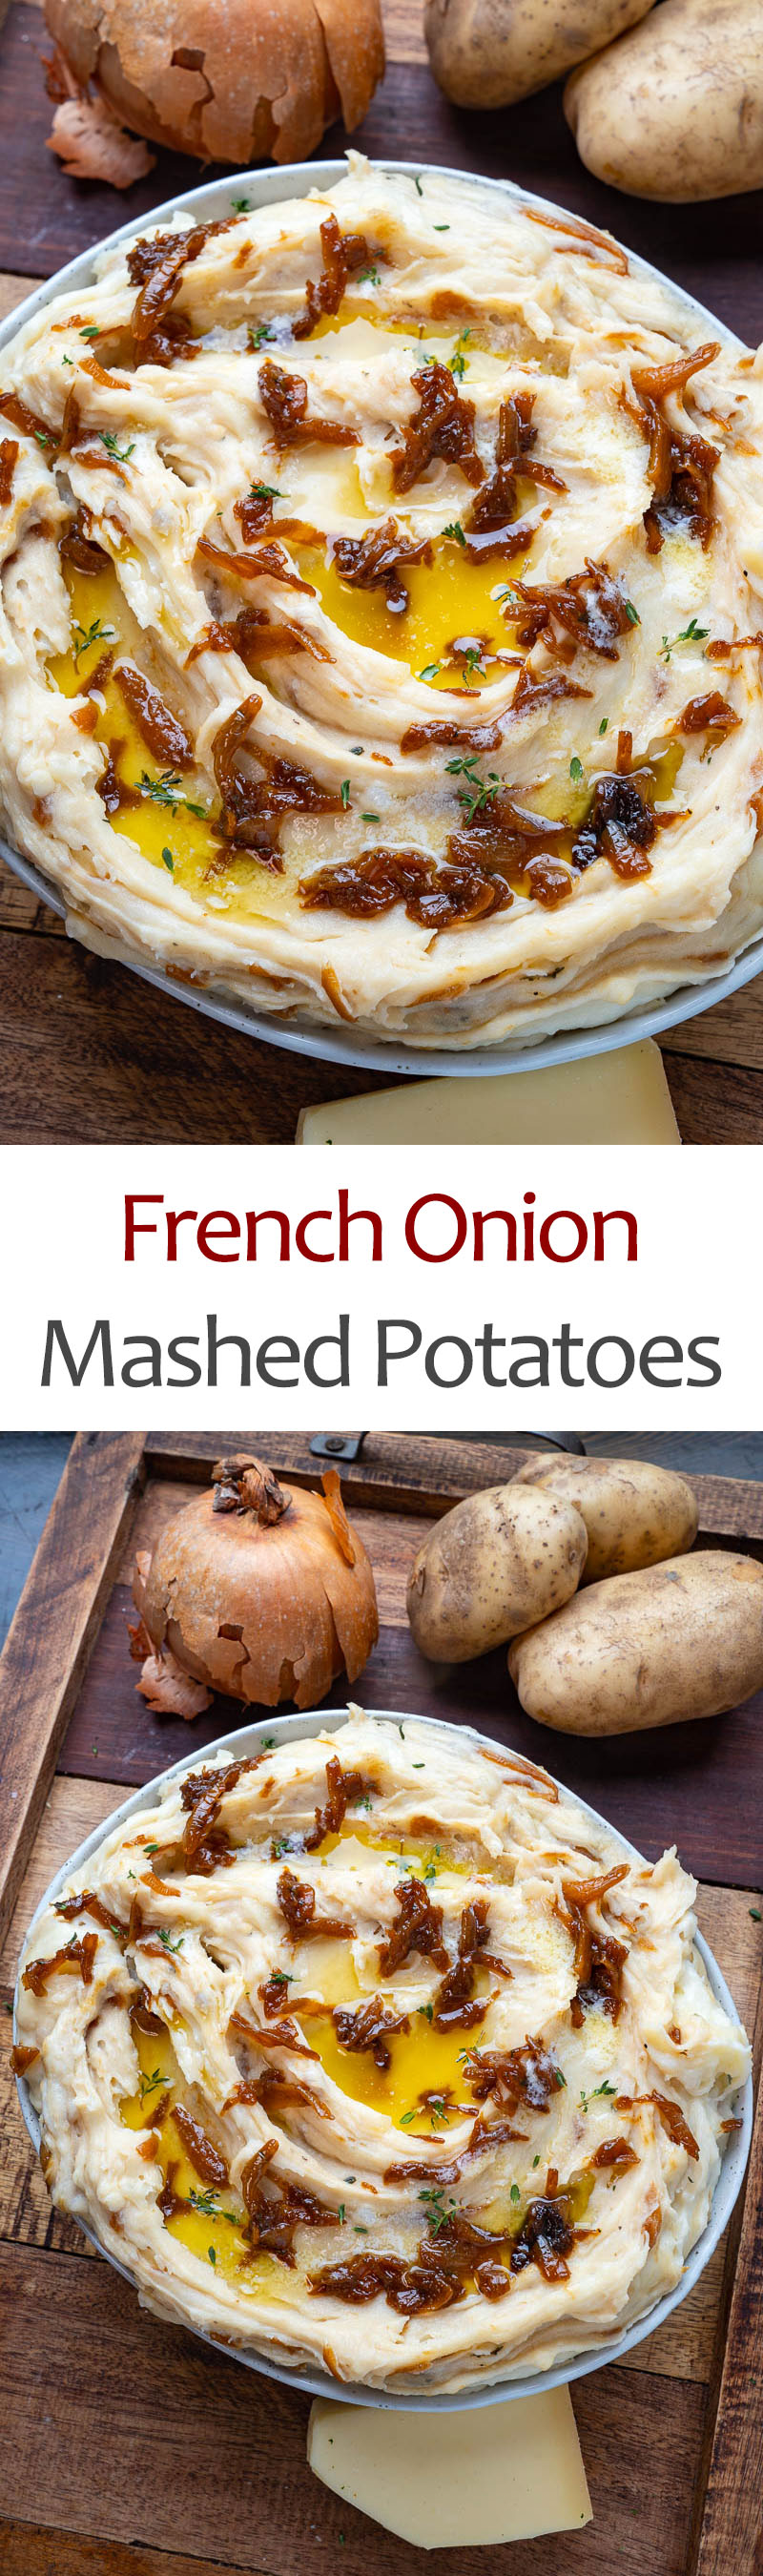 French Onion Mashed Potatoes